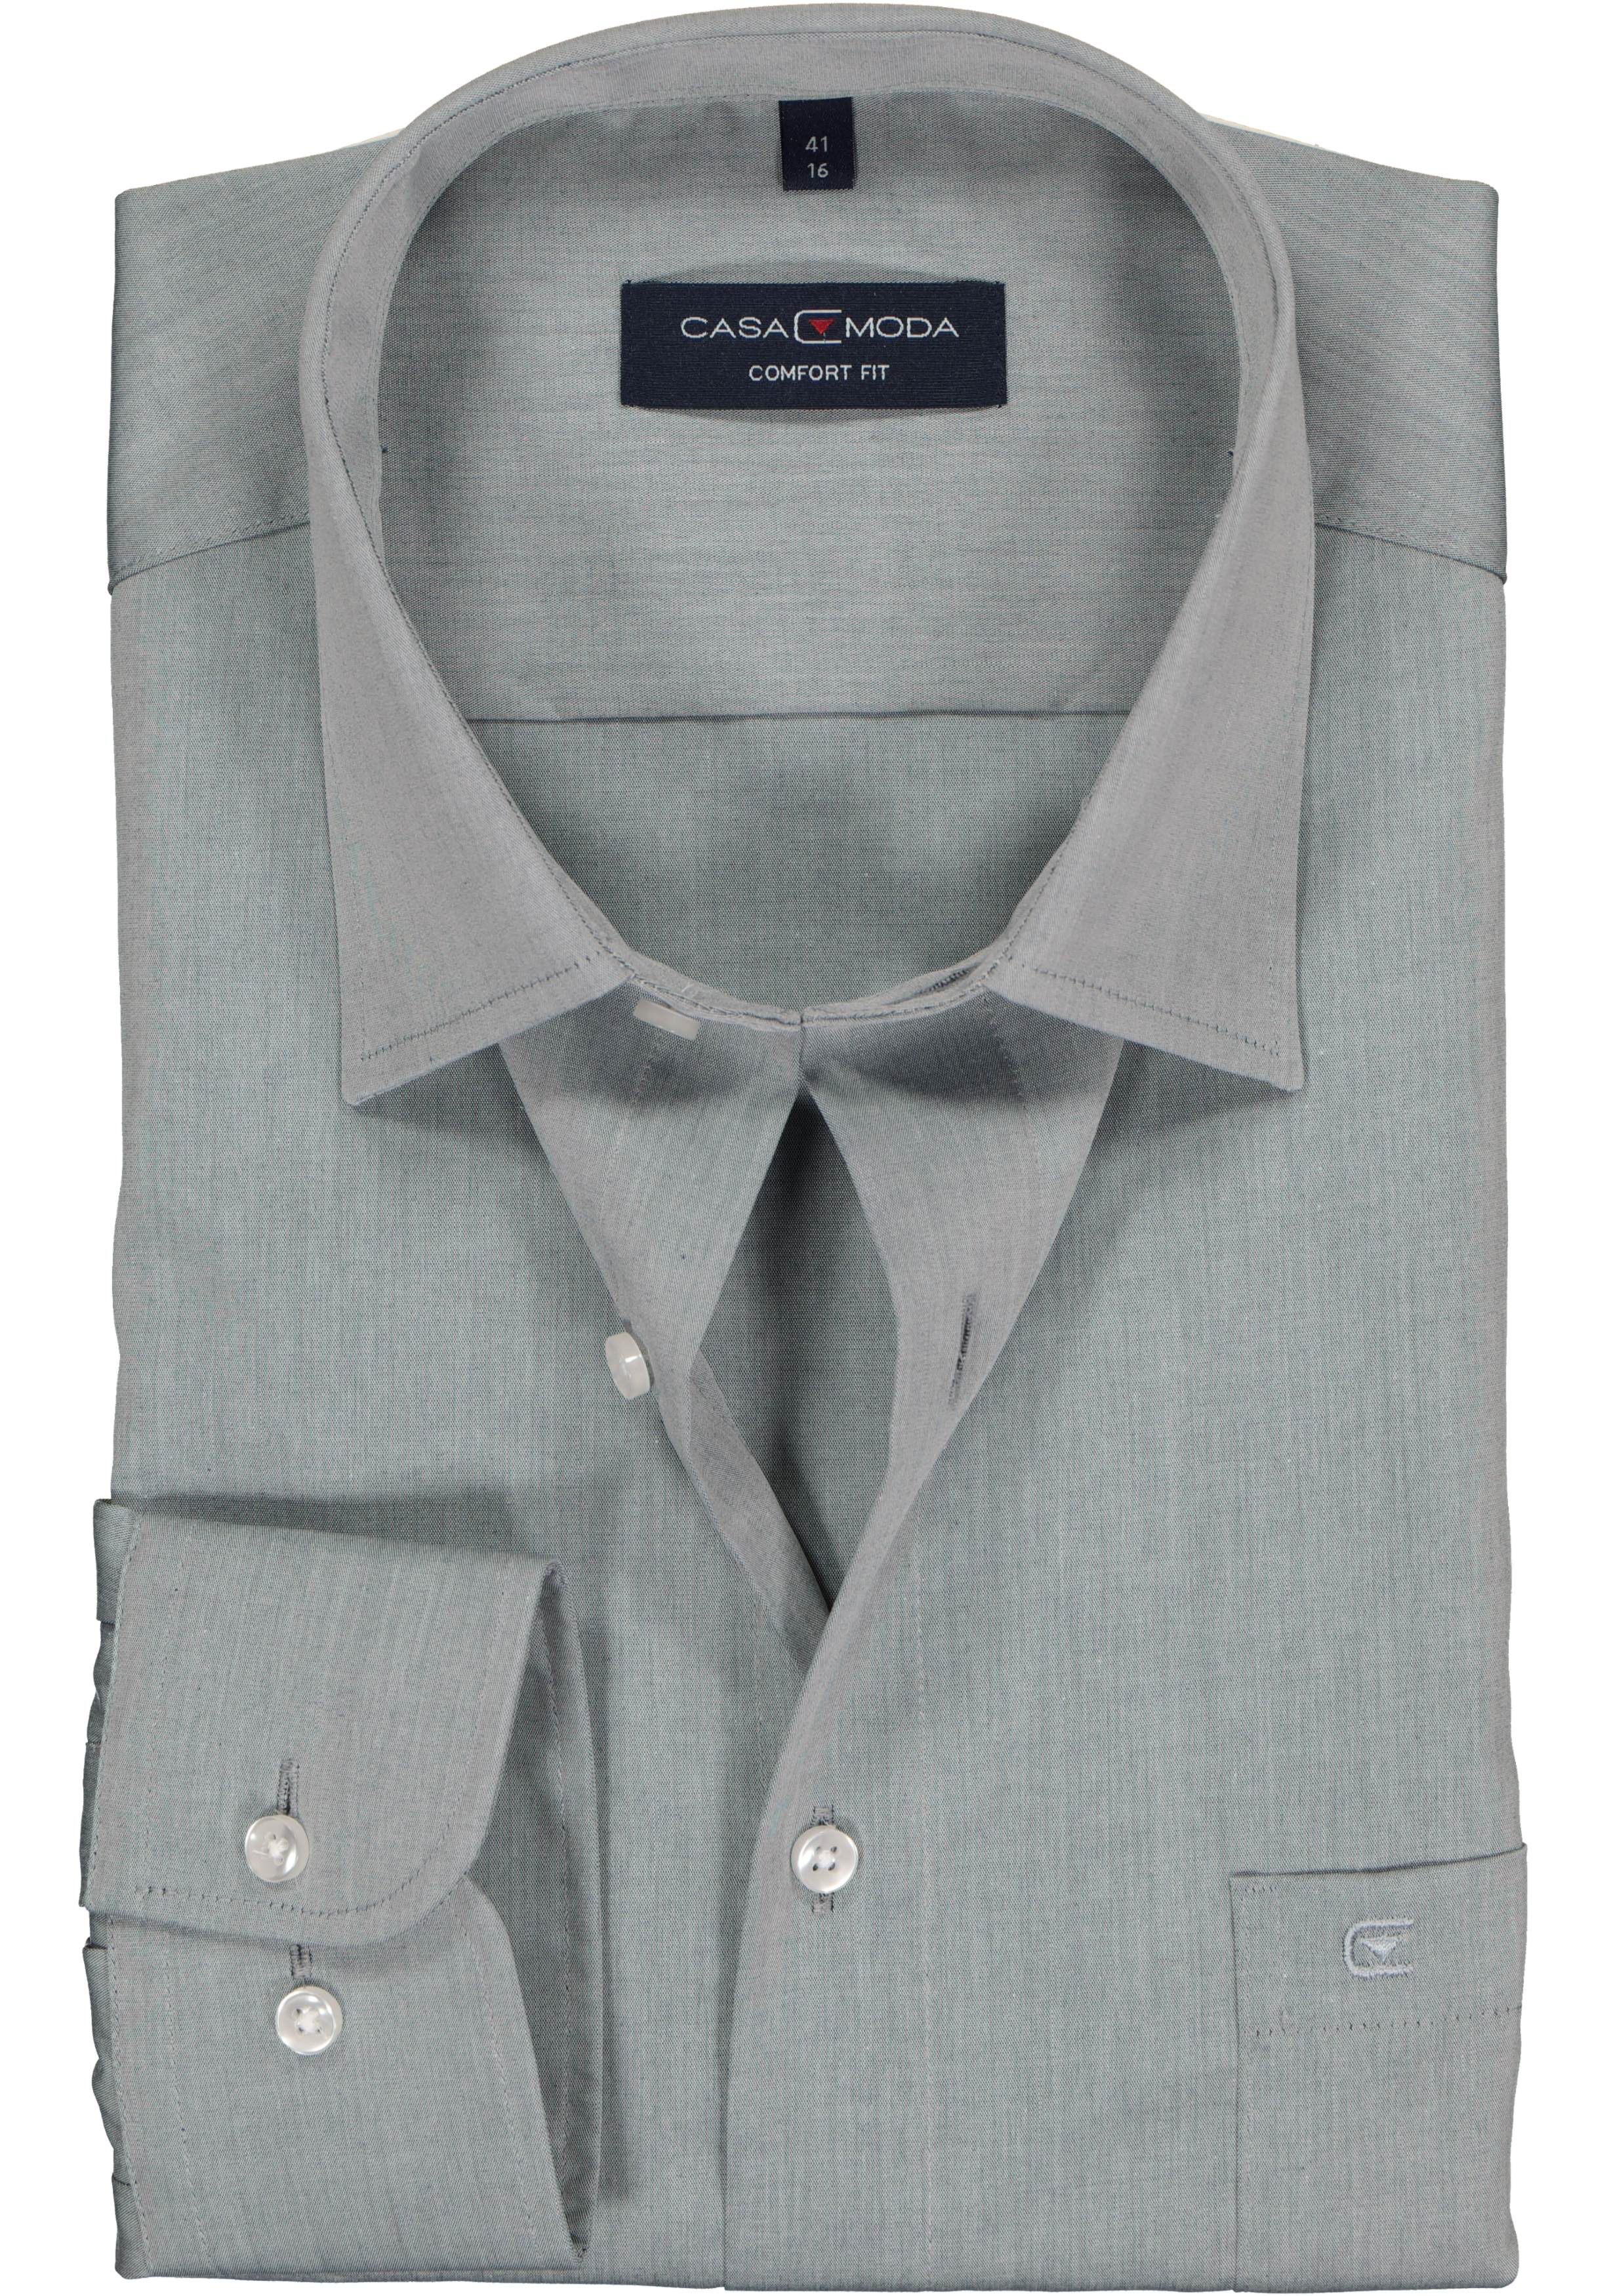 CASA MODA comfort fit overhemd, mouwlengte 72 cm, grijs  